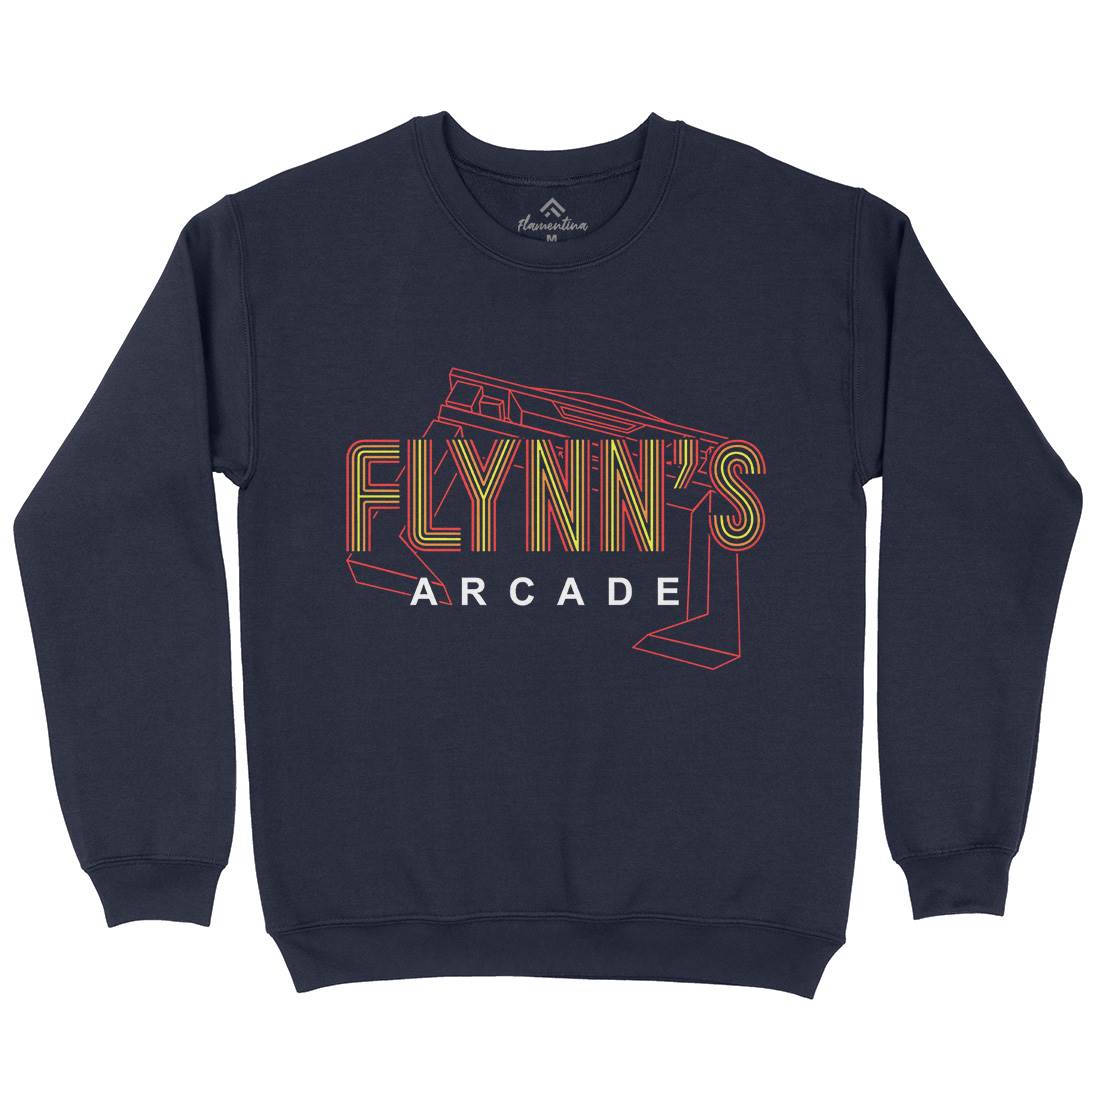 Flynns Arcade Kids Crew Neck Sweatshirt Space D154